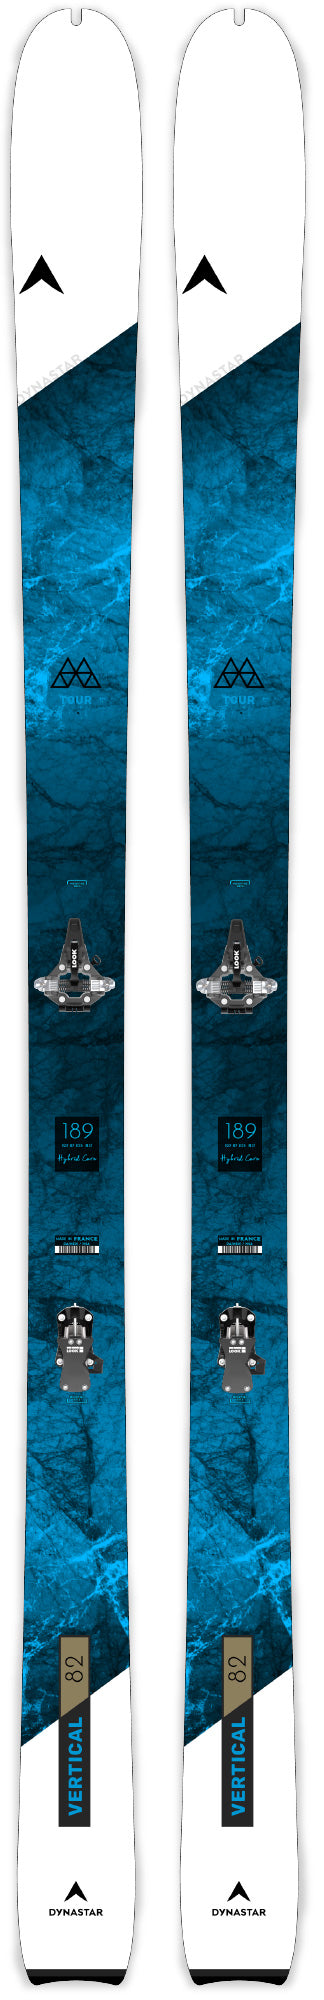 Pack rando neuf skis Dynastar M-Vertical 82 blue + Look ST 10 + peaux - neuf déstockage